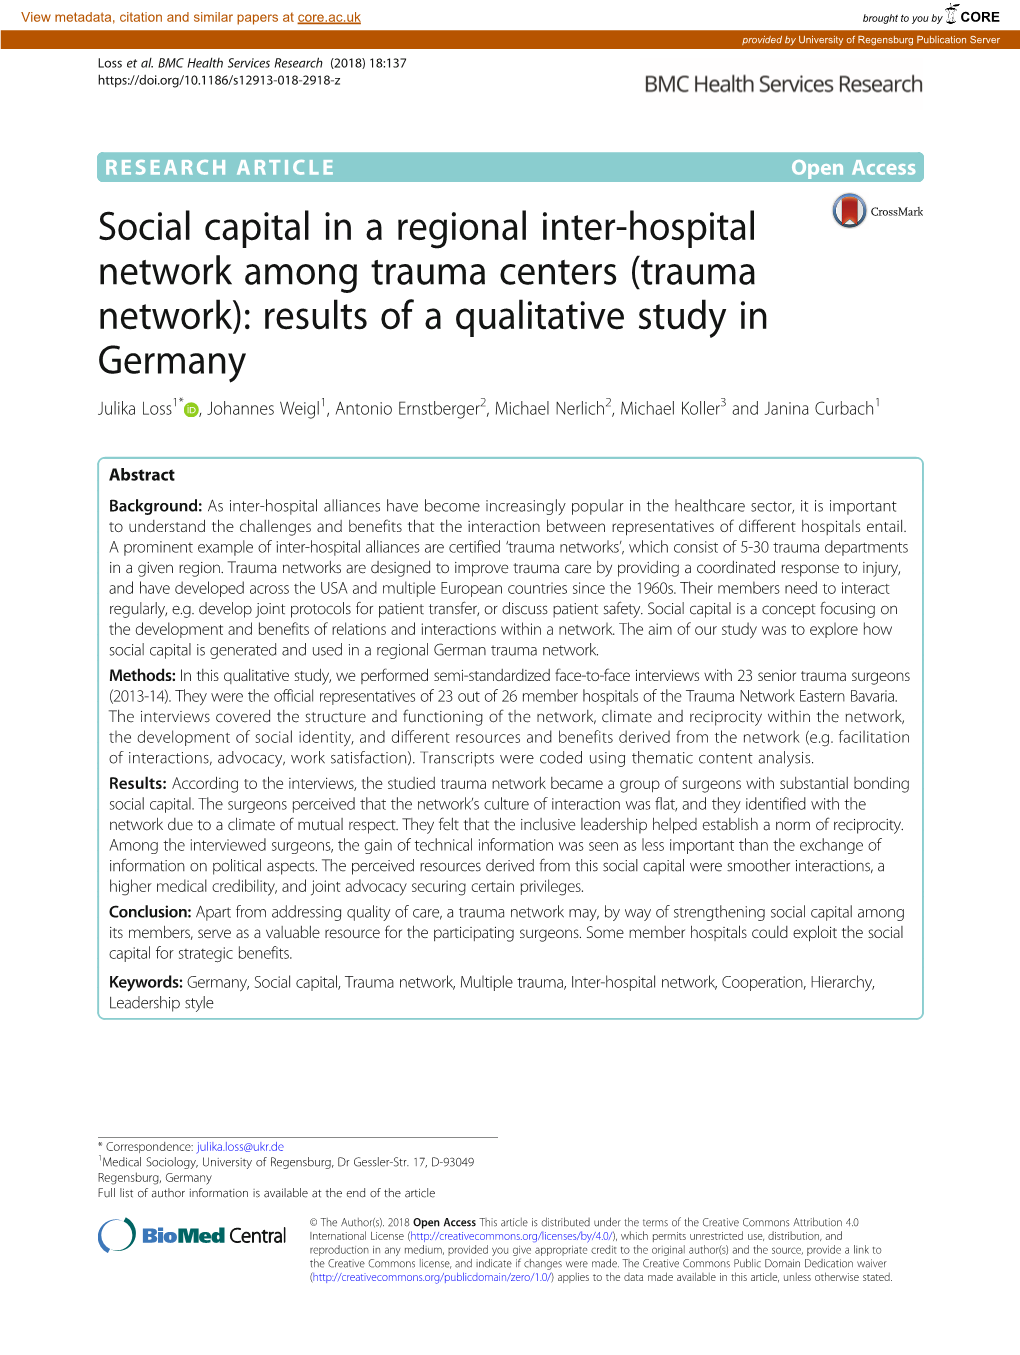 Social Capital in a Regional Inter-Hospital Network Among Trauma Centers